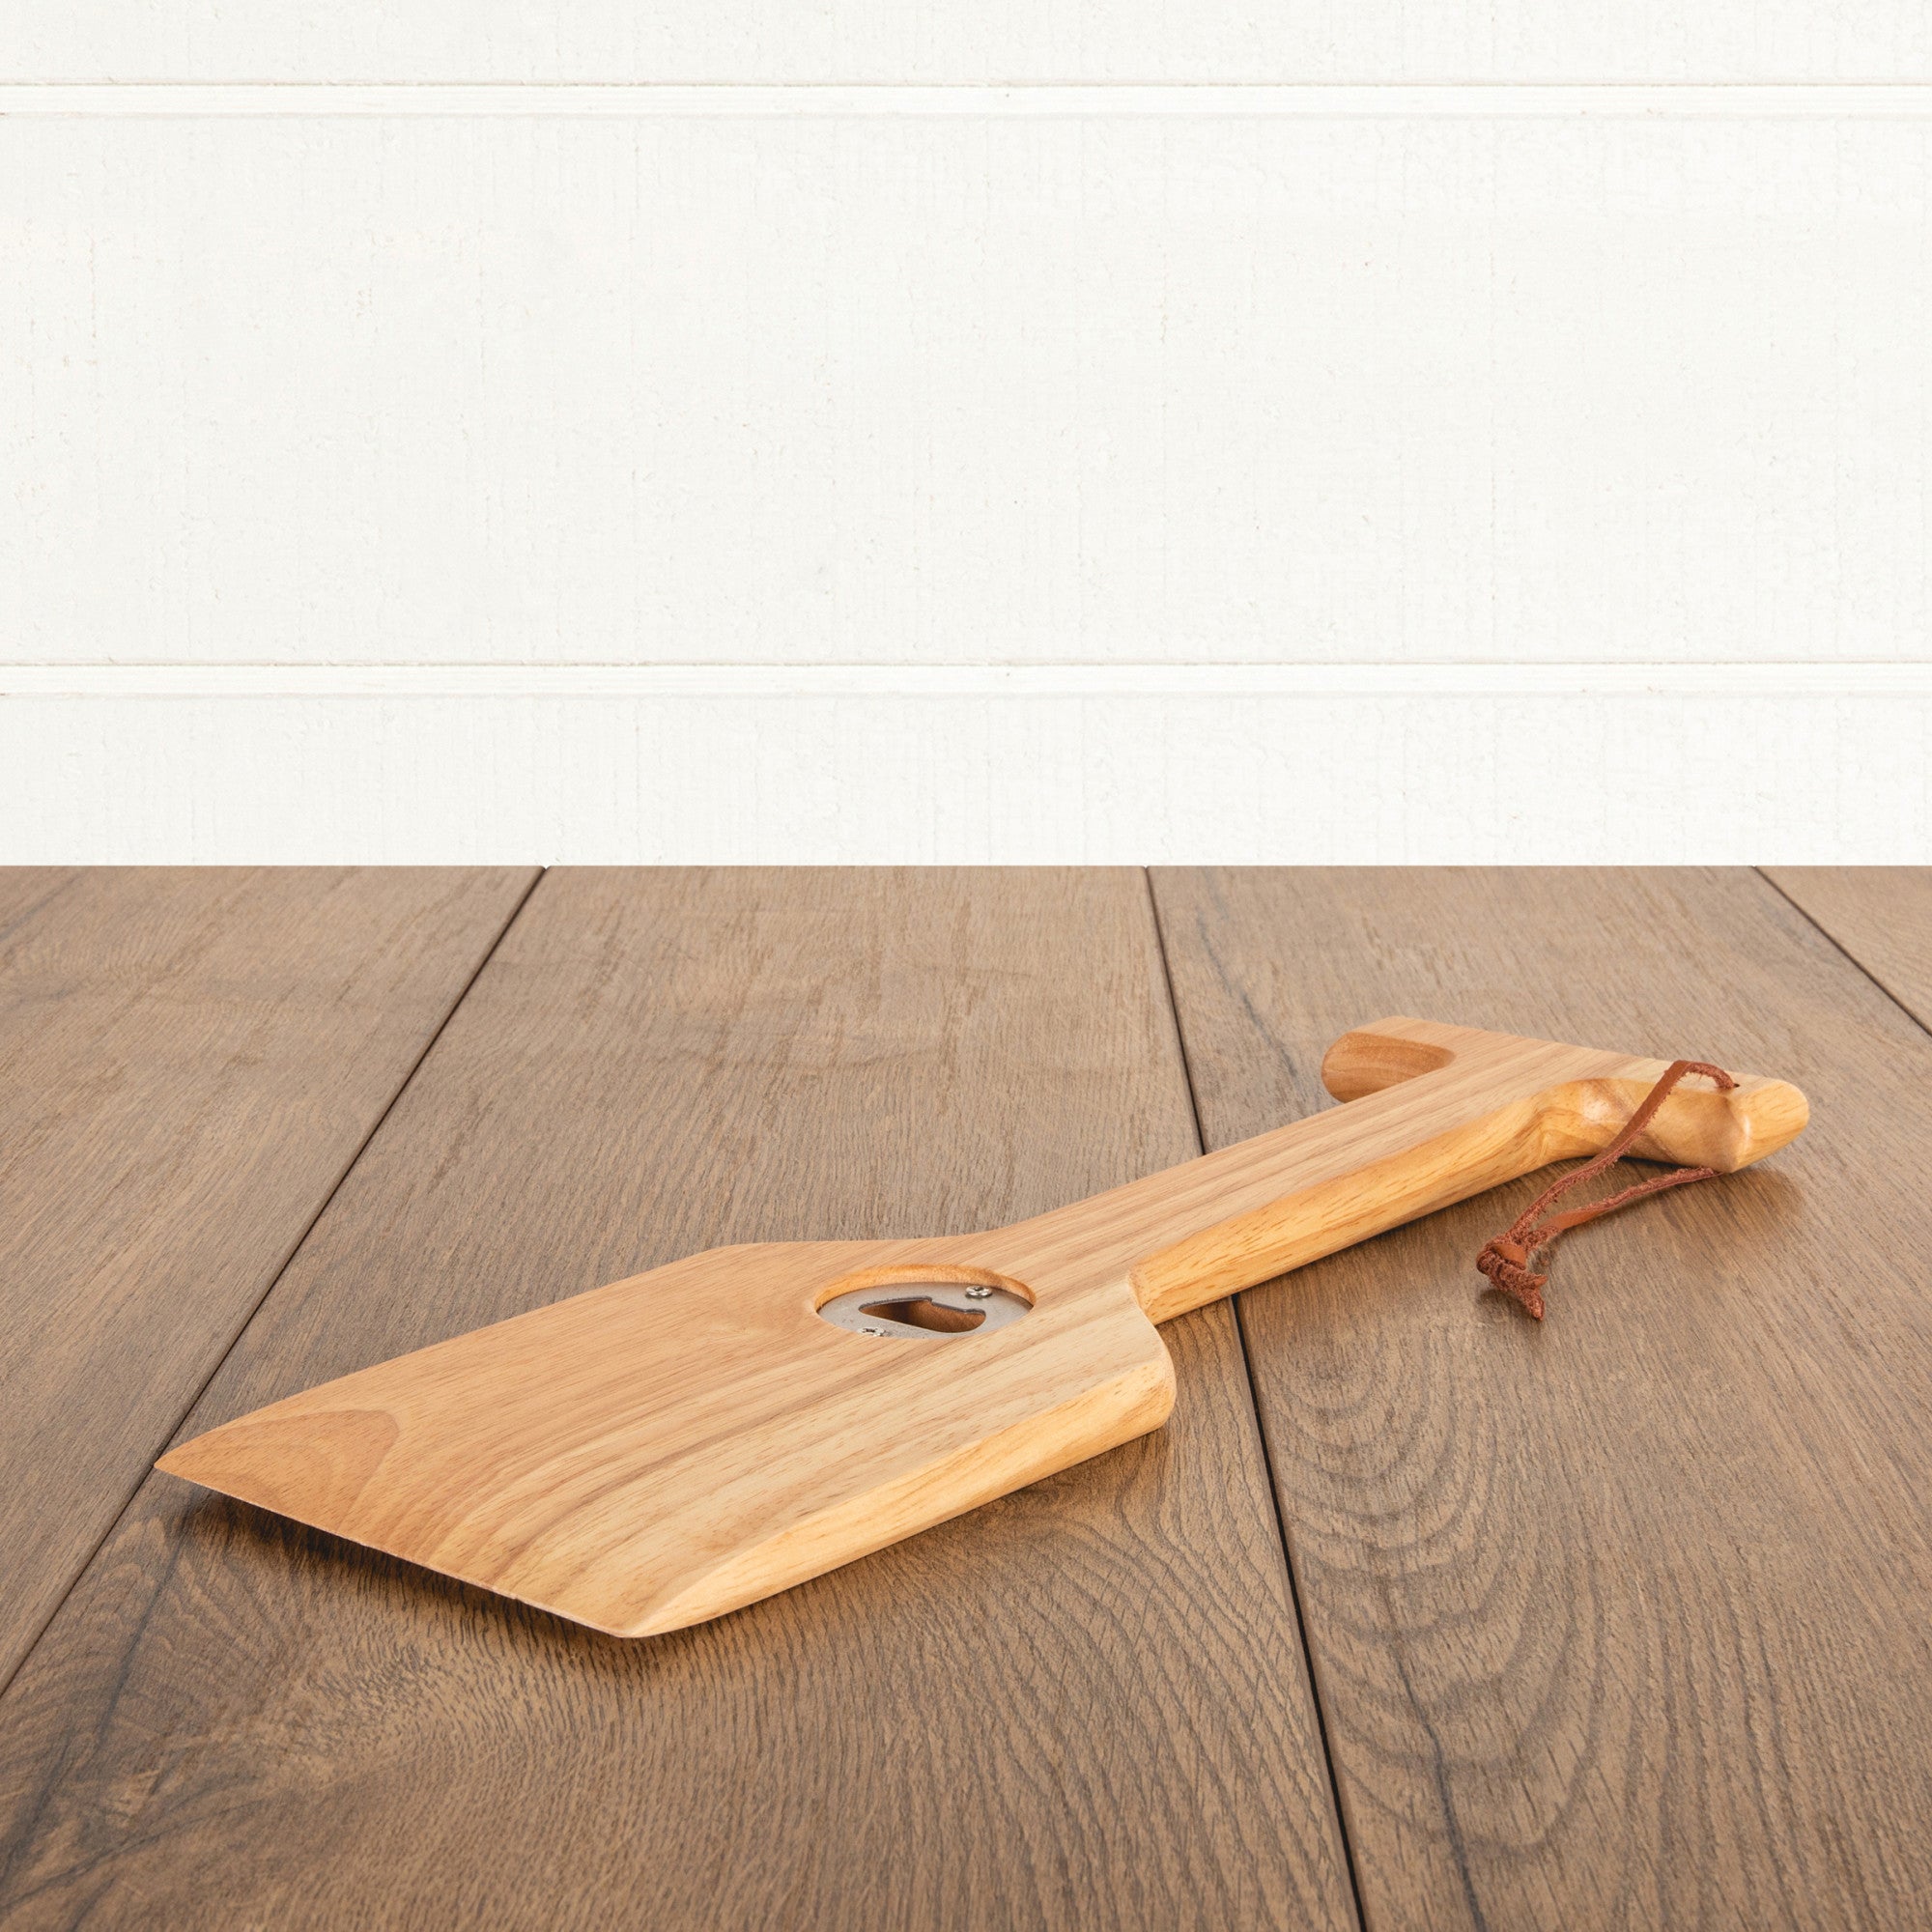 Buy Wholesale Wood Grill Scraper Tool with Bottle Opener